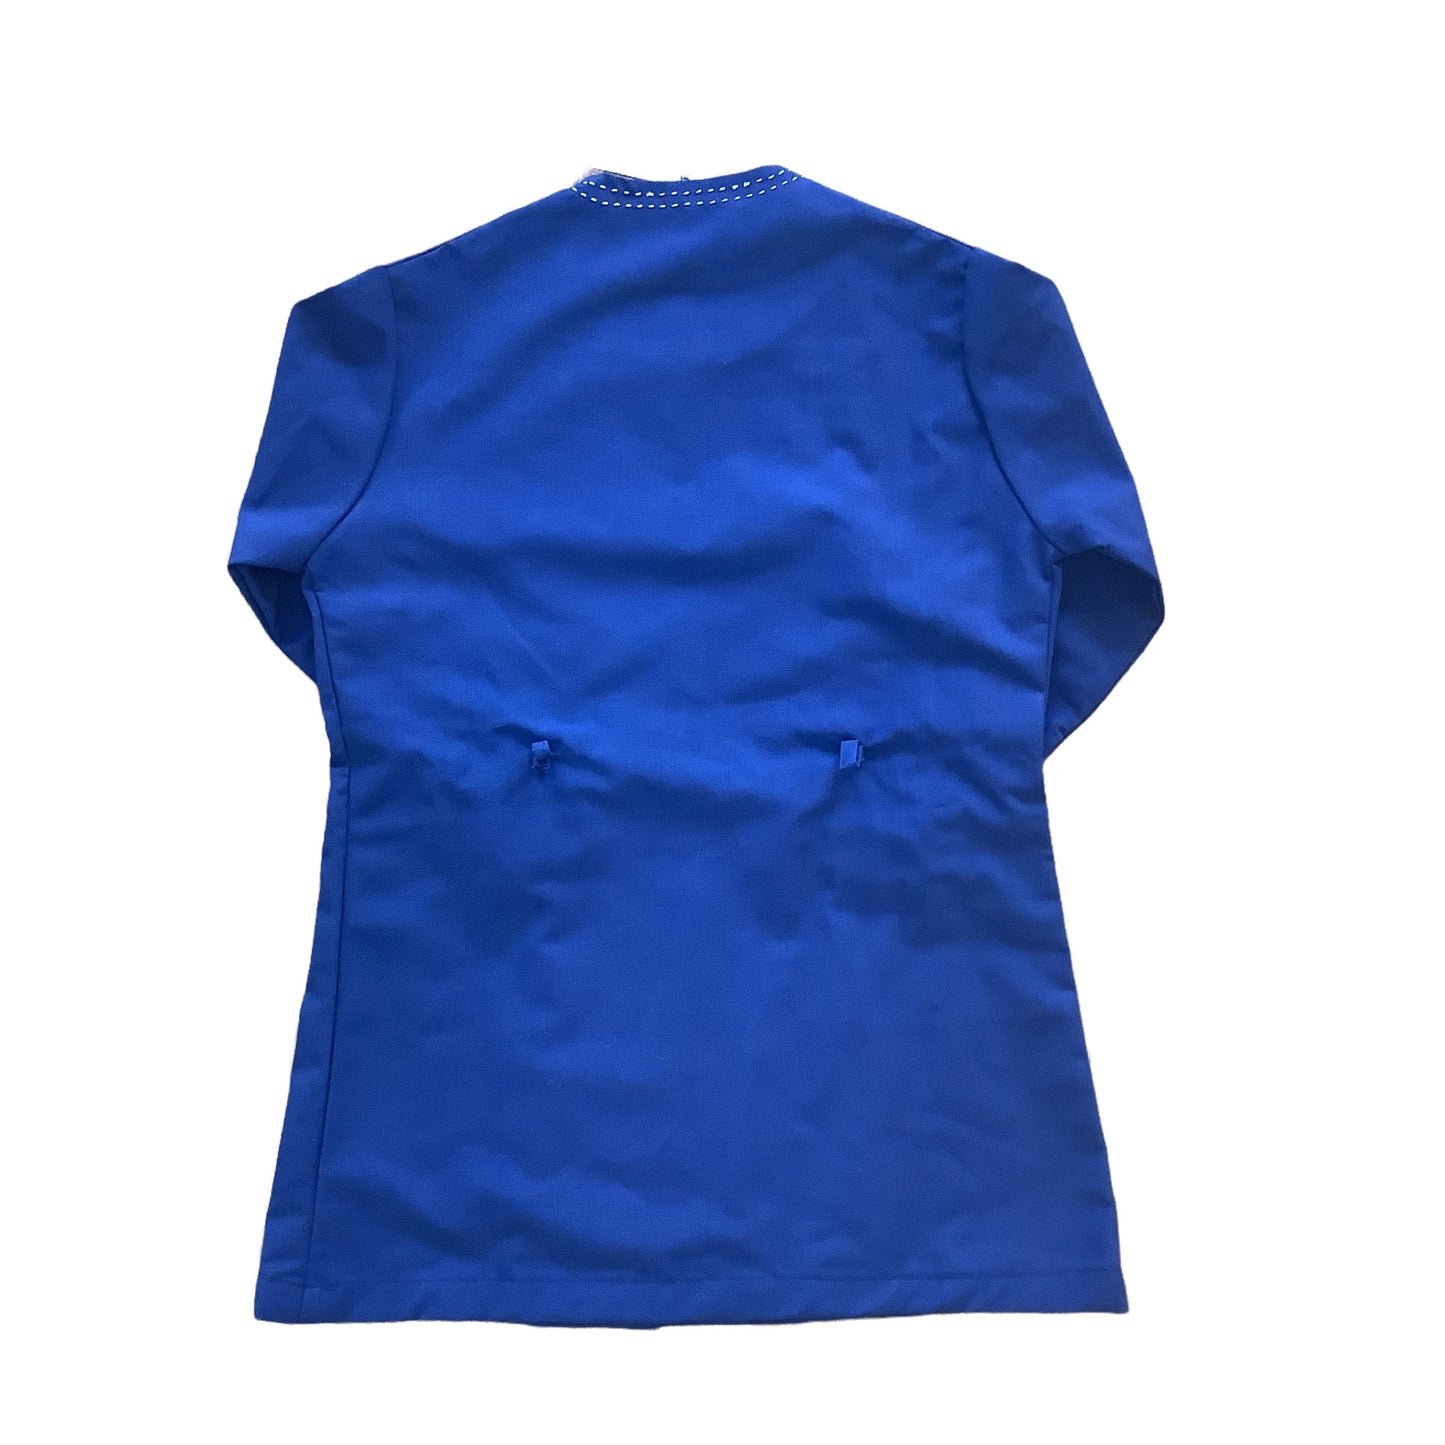 Vintage 1960's Blue School Blouse / Dress 6-8 Years